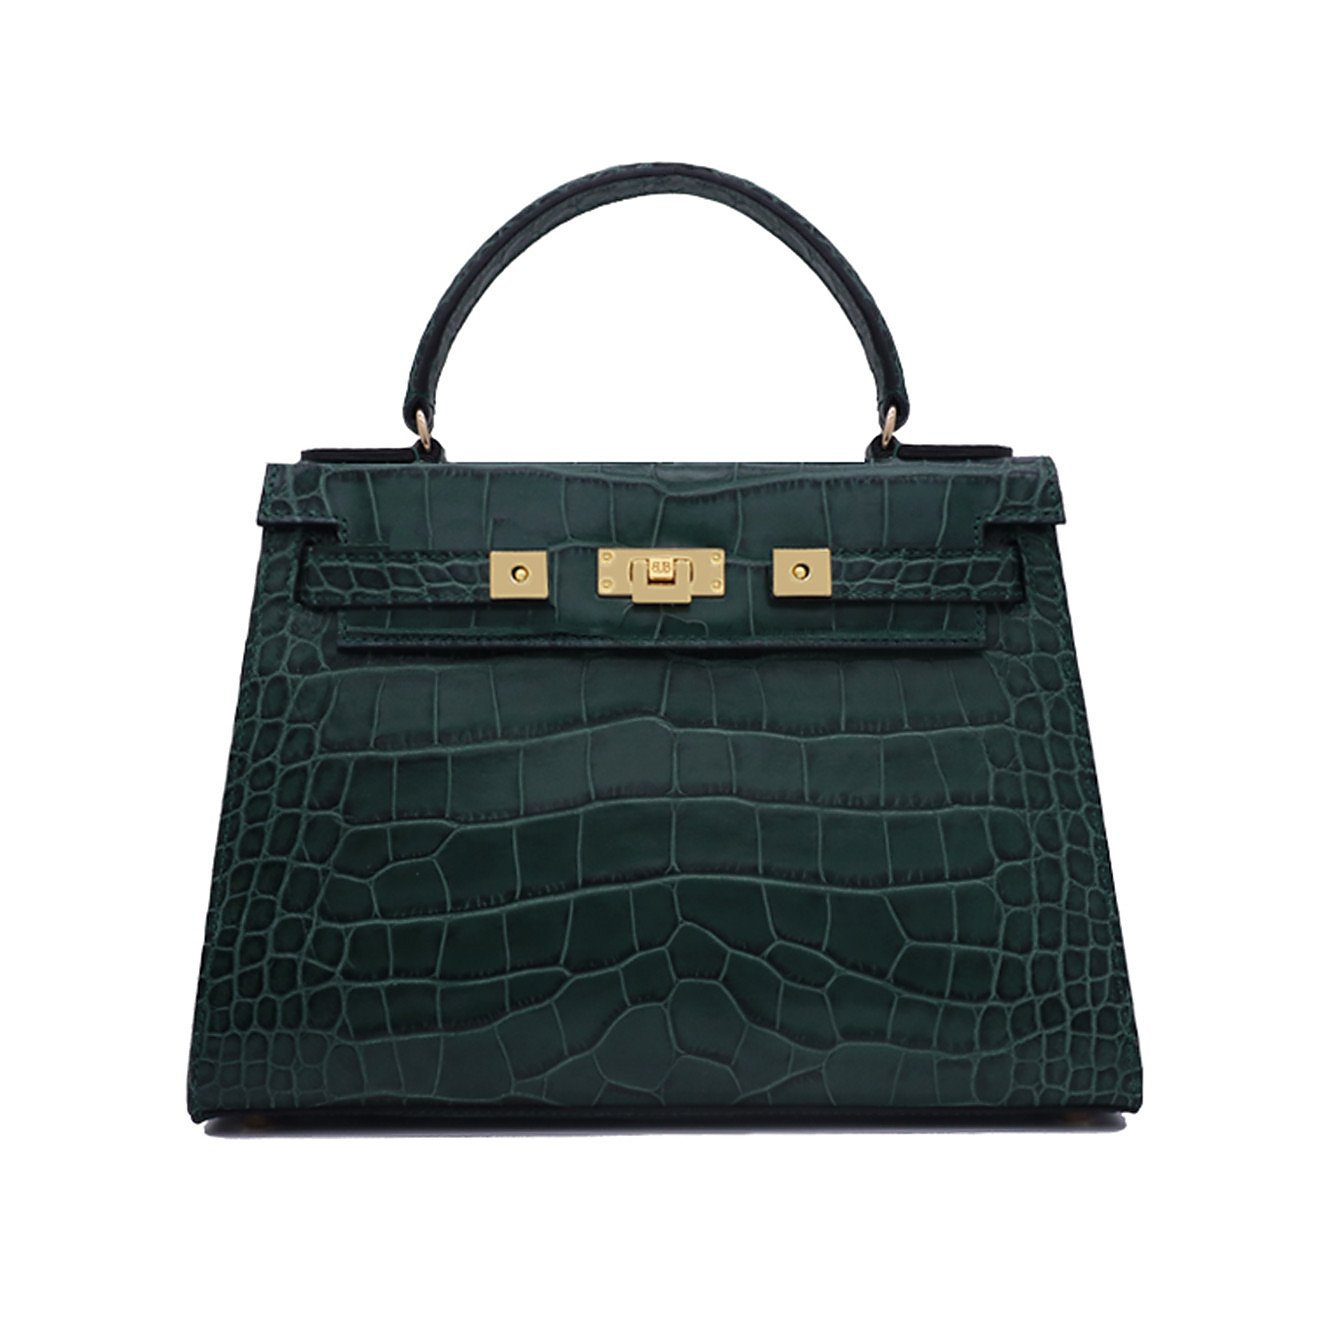 Lalage Beaumont Maya Large 'Croc' Print Leather Handbag - Dark Green